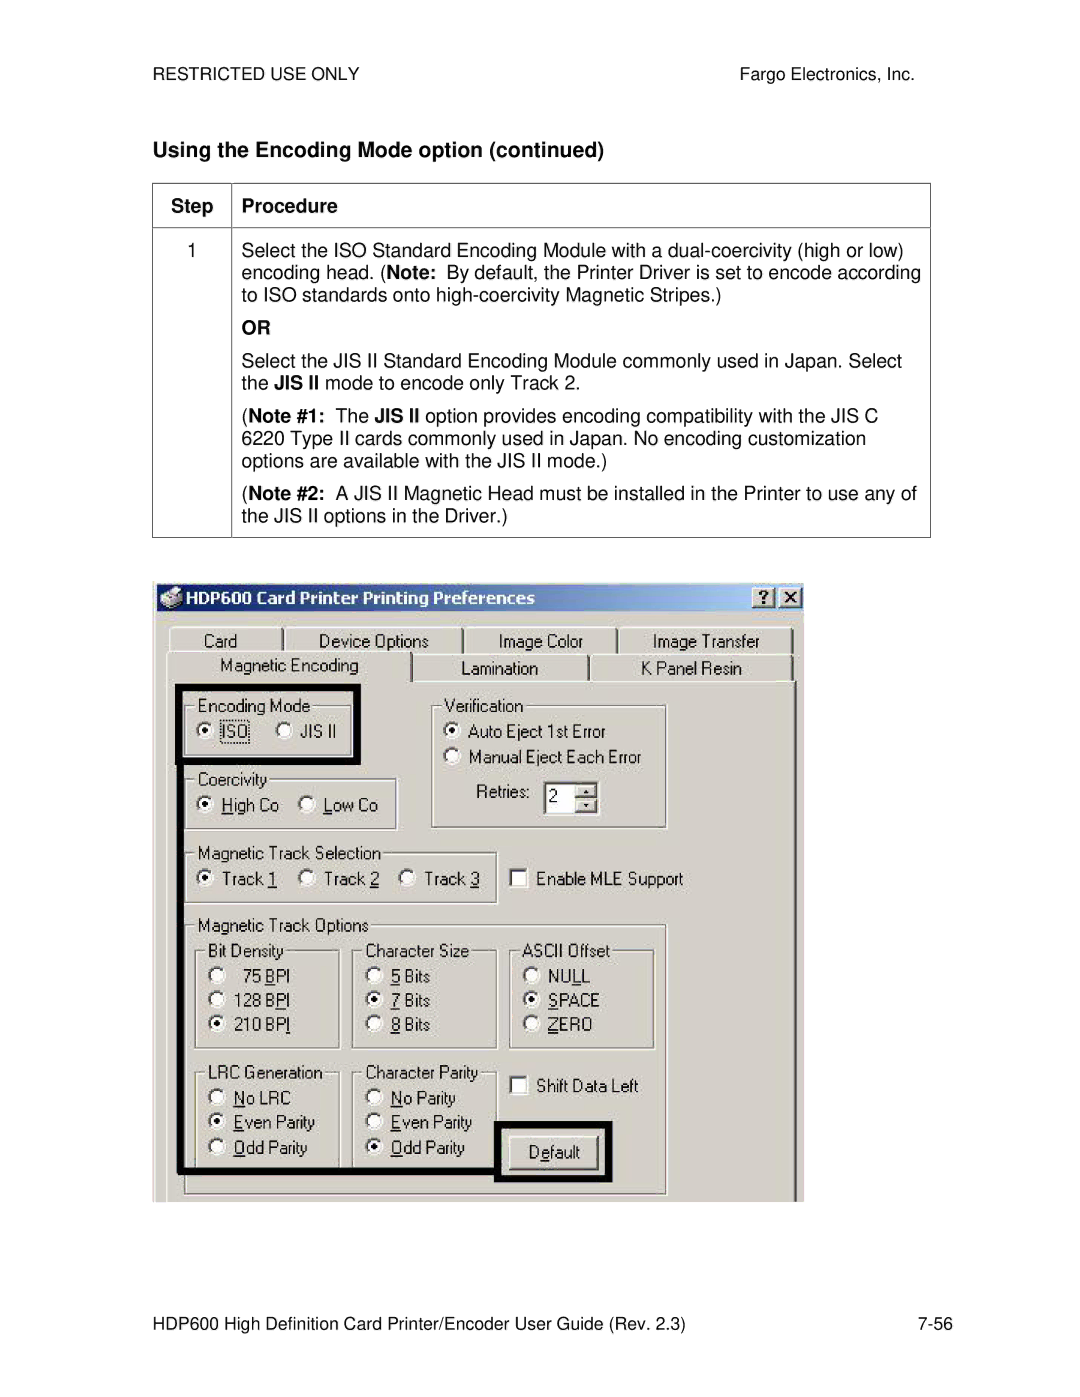 FARGO electronic HDP600 CR100, HDP600-LC manual Using the Encoding Mode option 